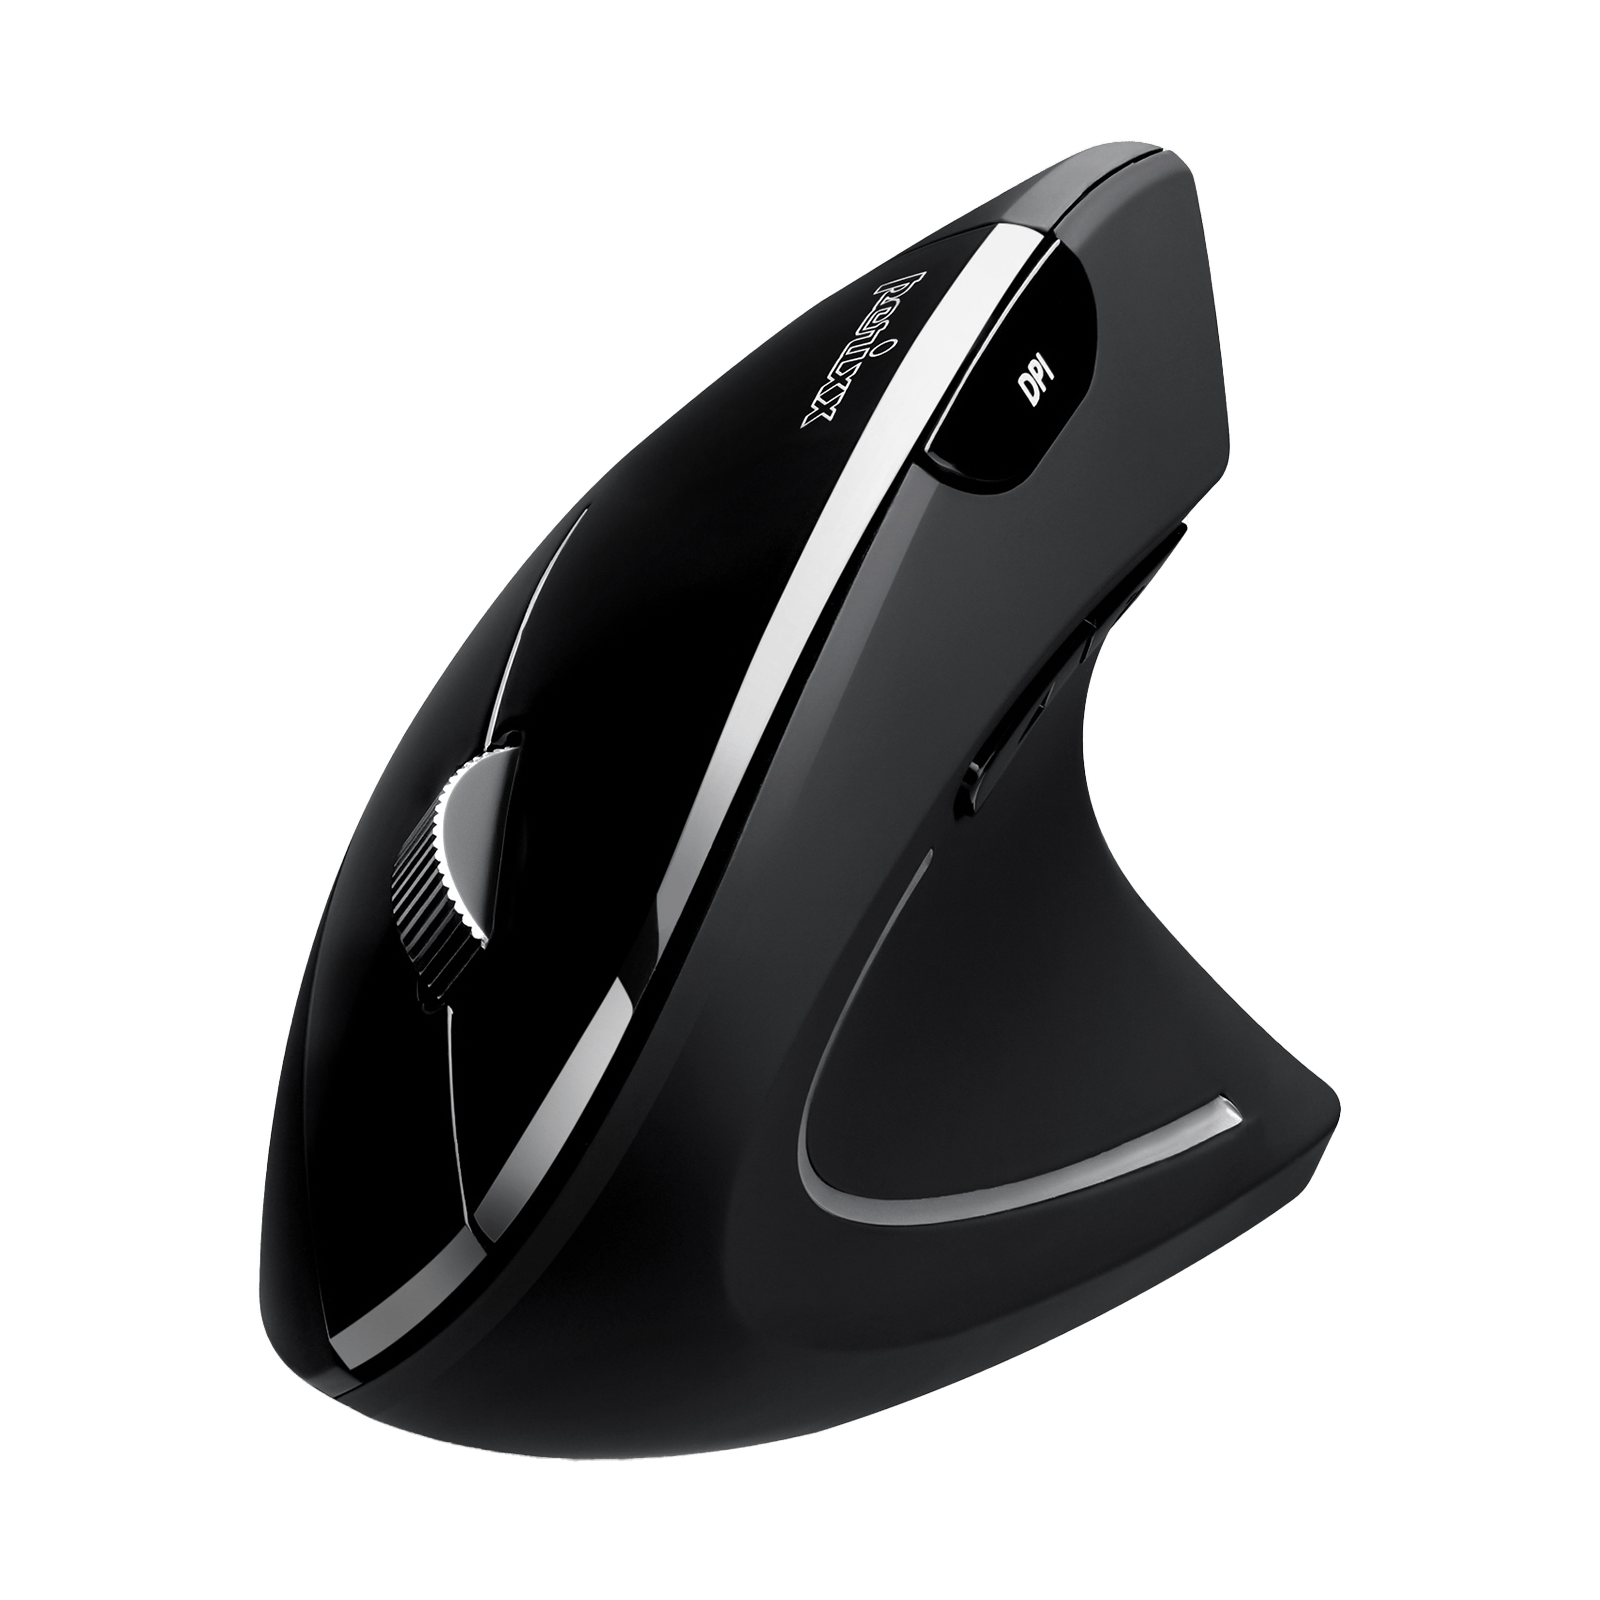 PERIMICE-813 - Wireless Ergonomic Vertical Mouse - Multi-Device - Perixx Europe